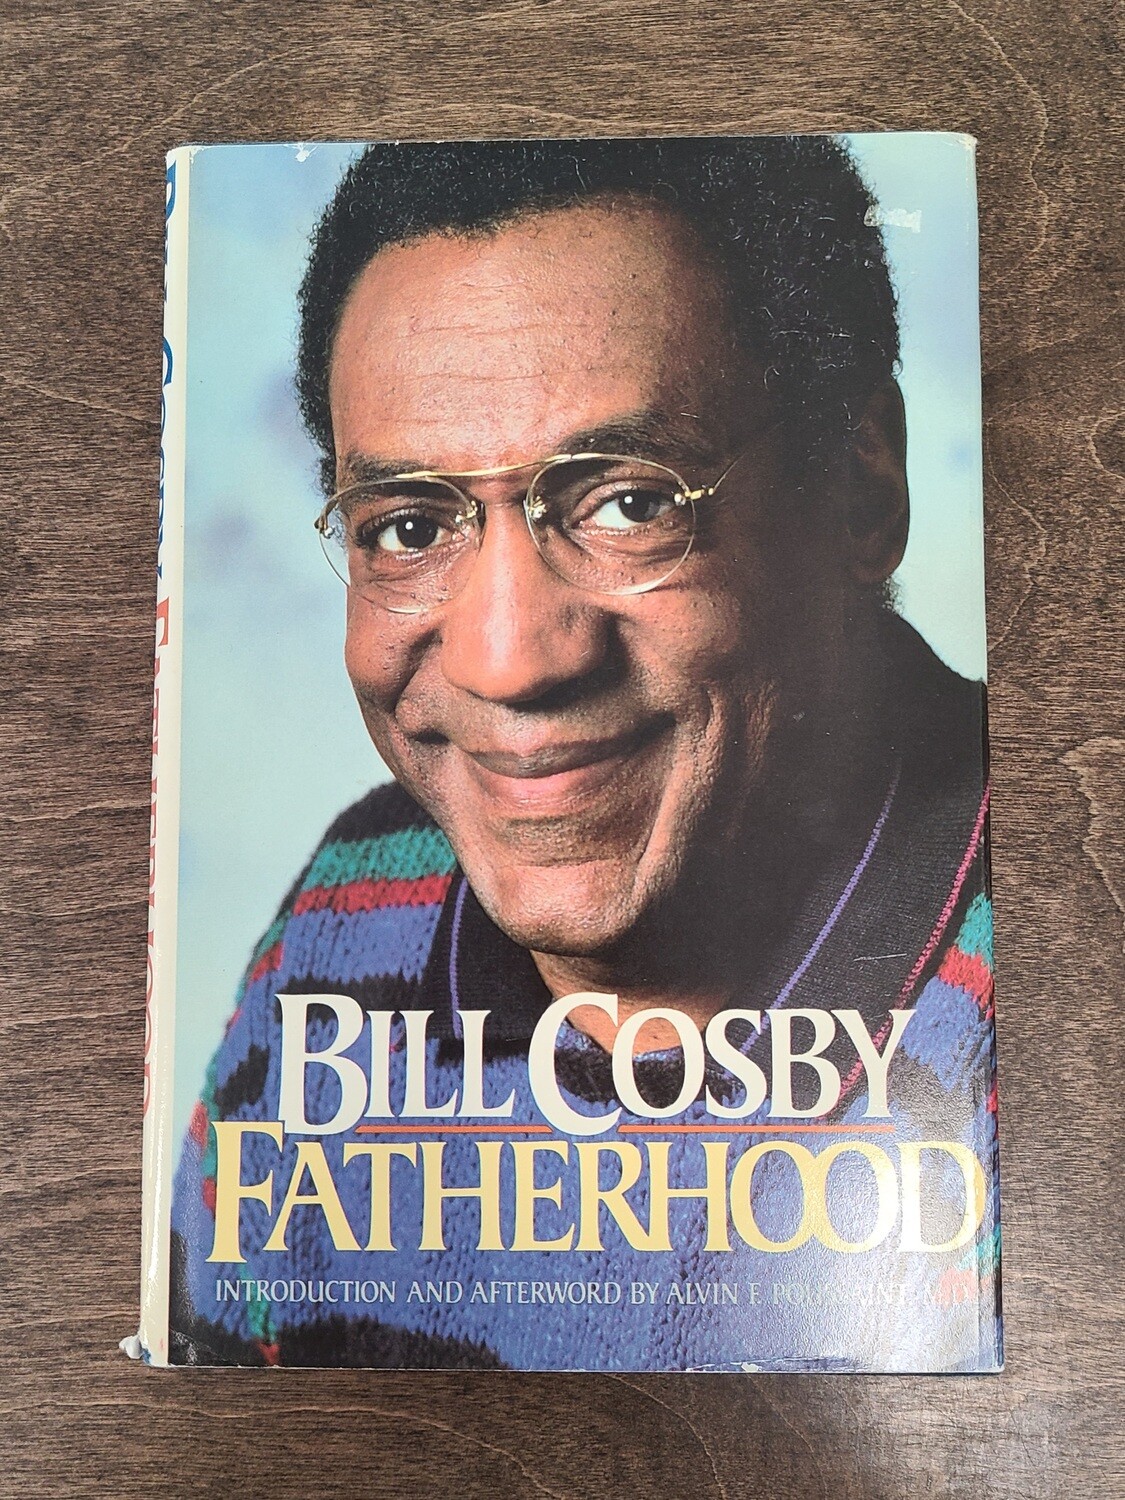 Fatherhood by Bill Cosby